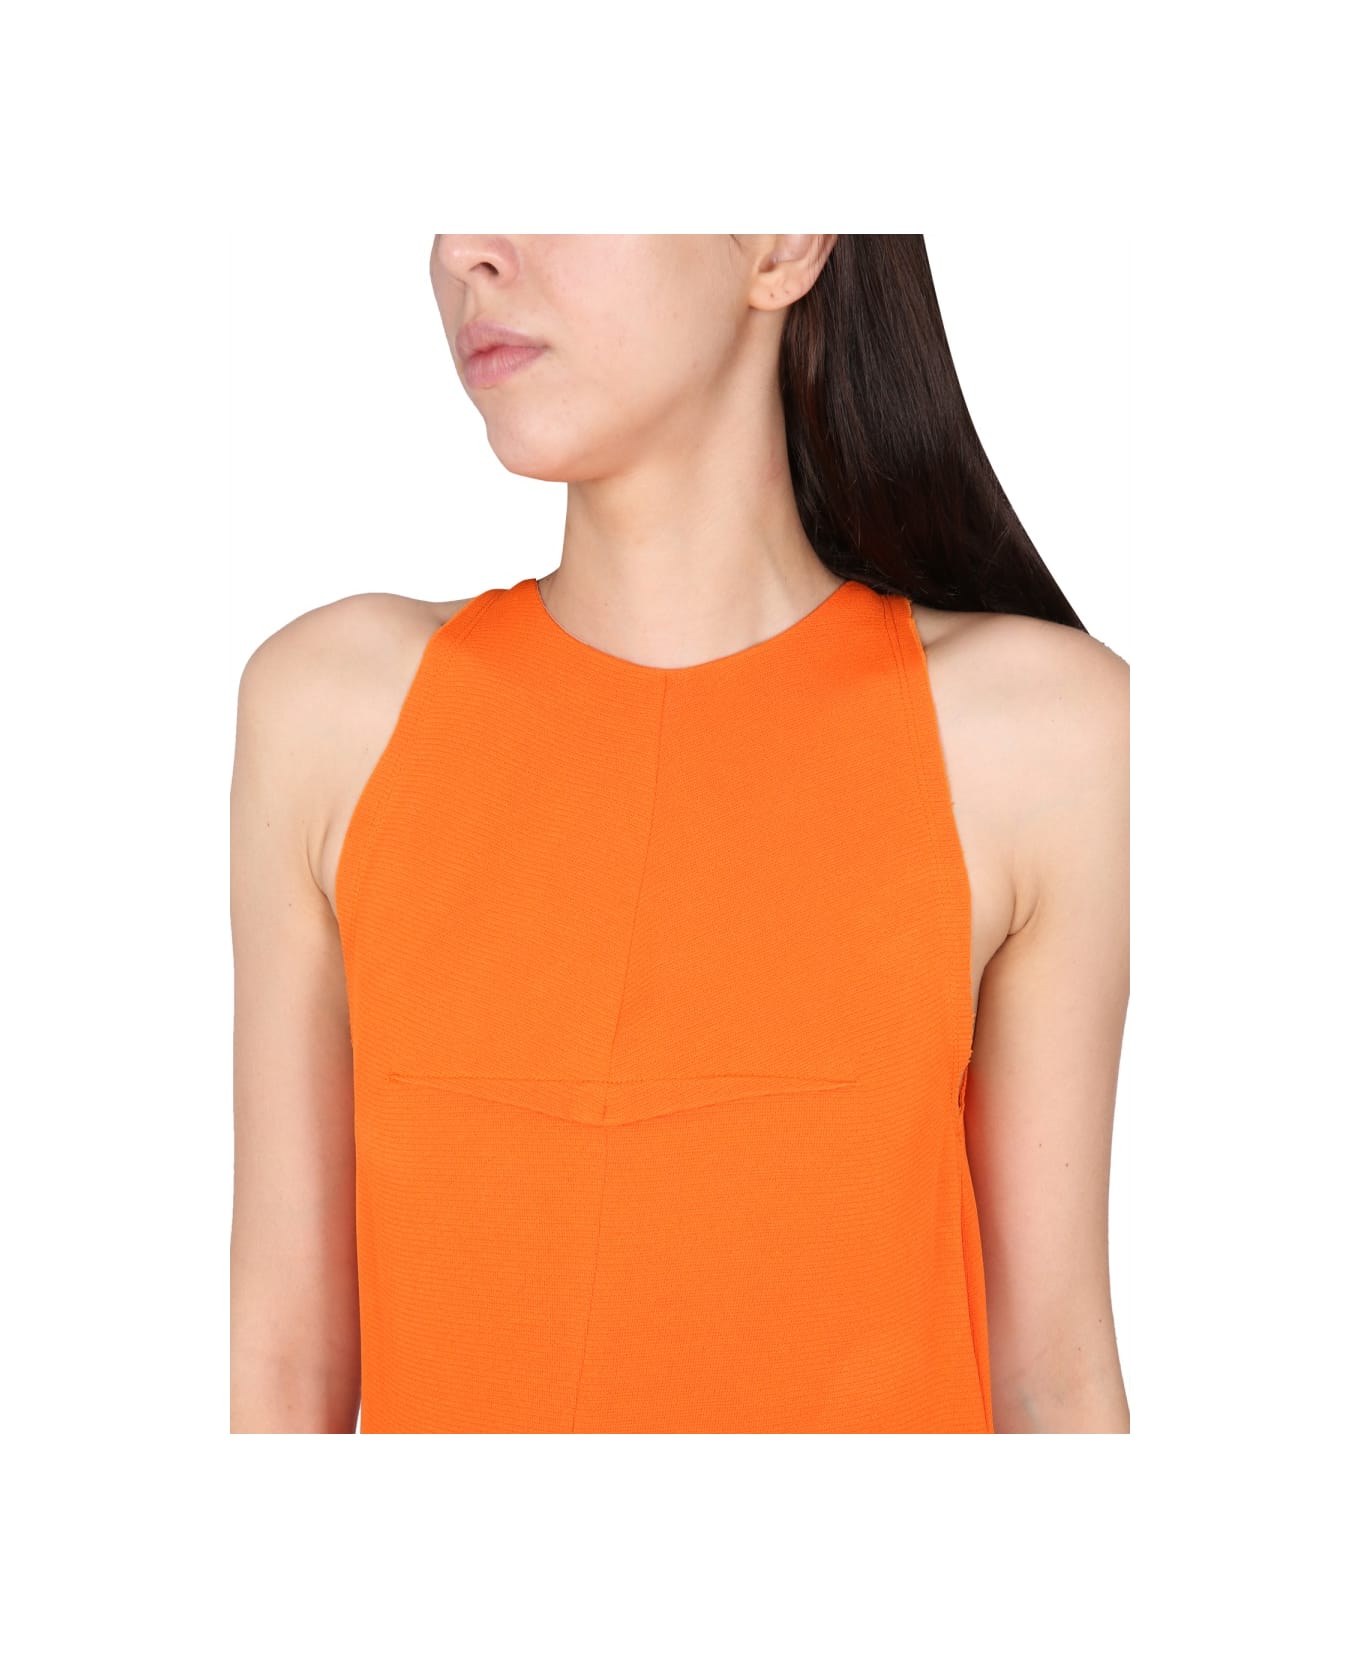 Lanvin Longuette Dress - BRIGHT ORANGE